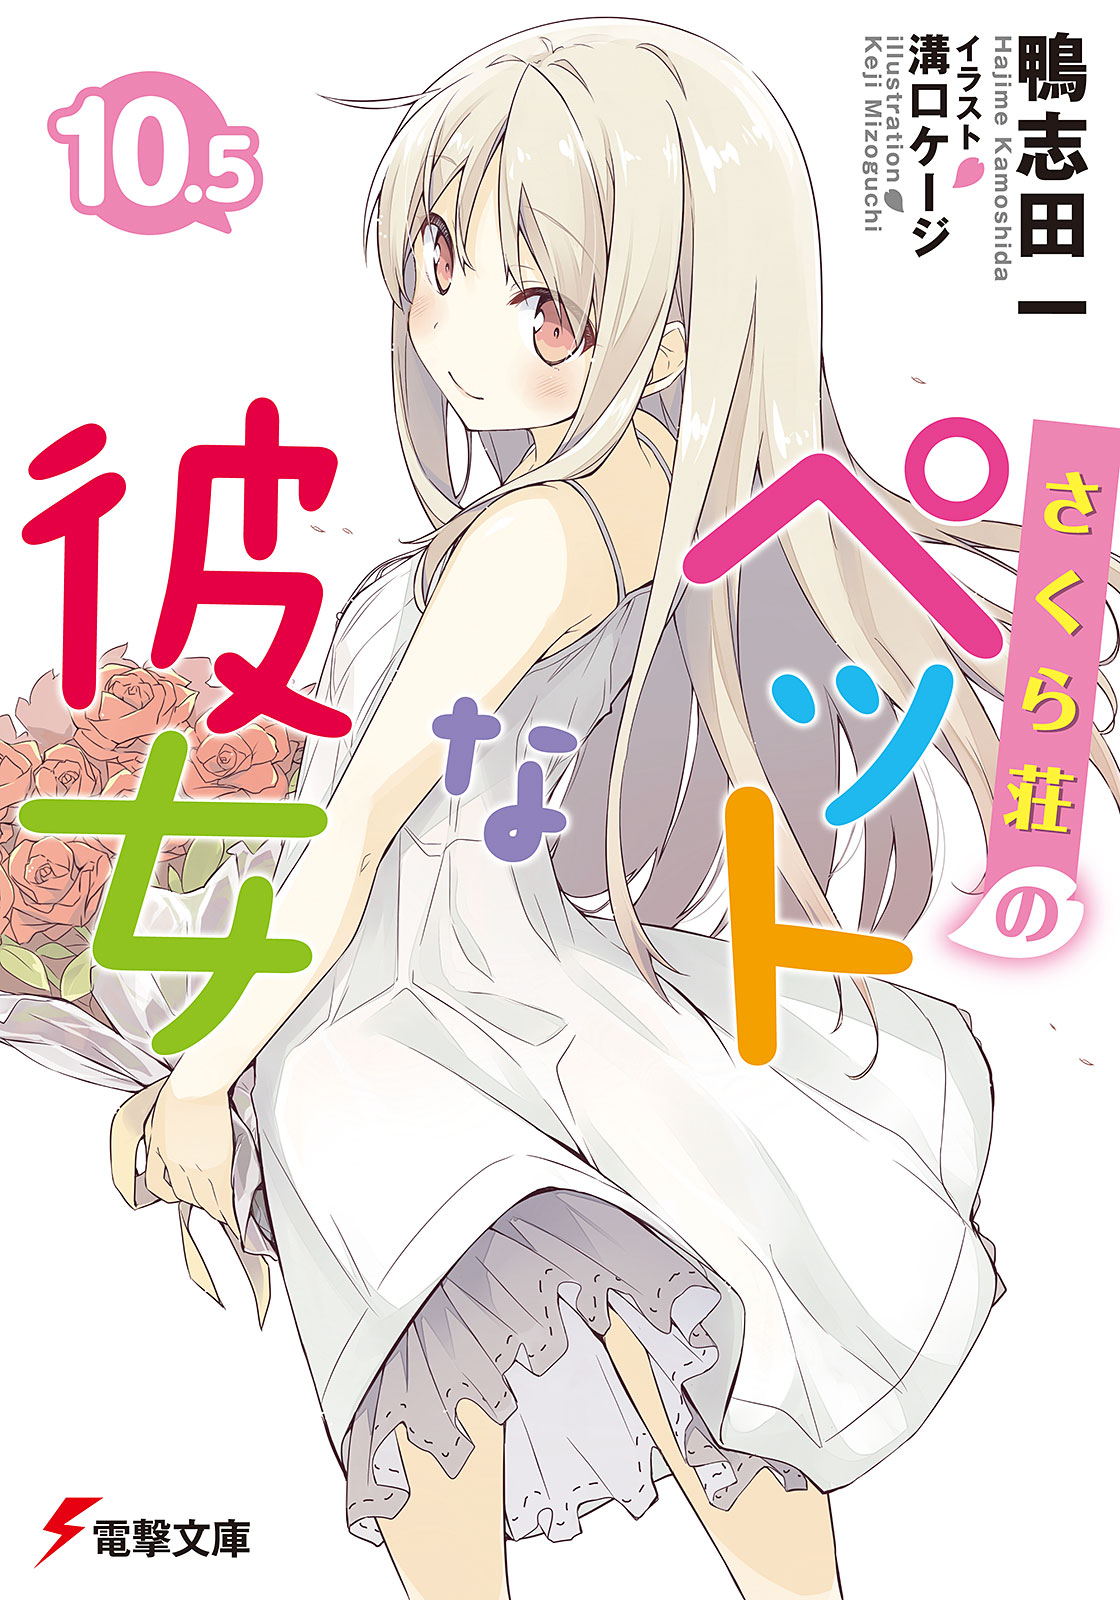 sakurasou no pet na kanojo light novel epub download